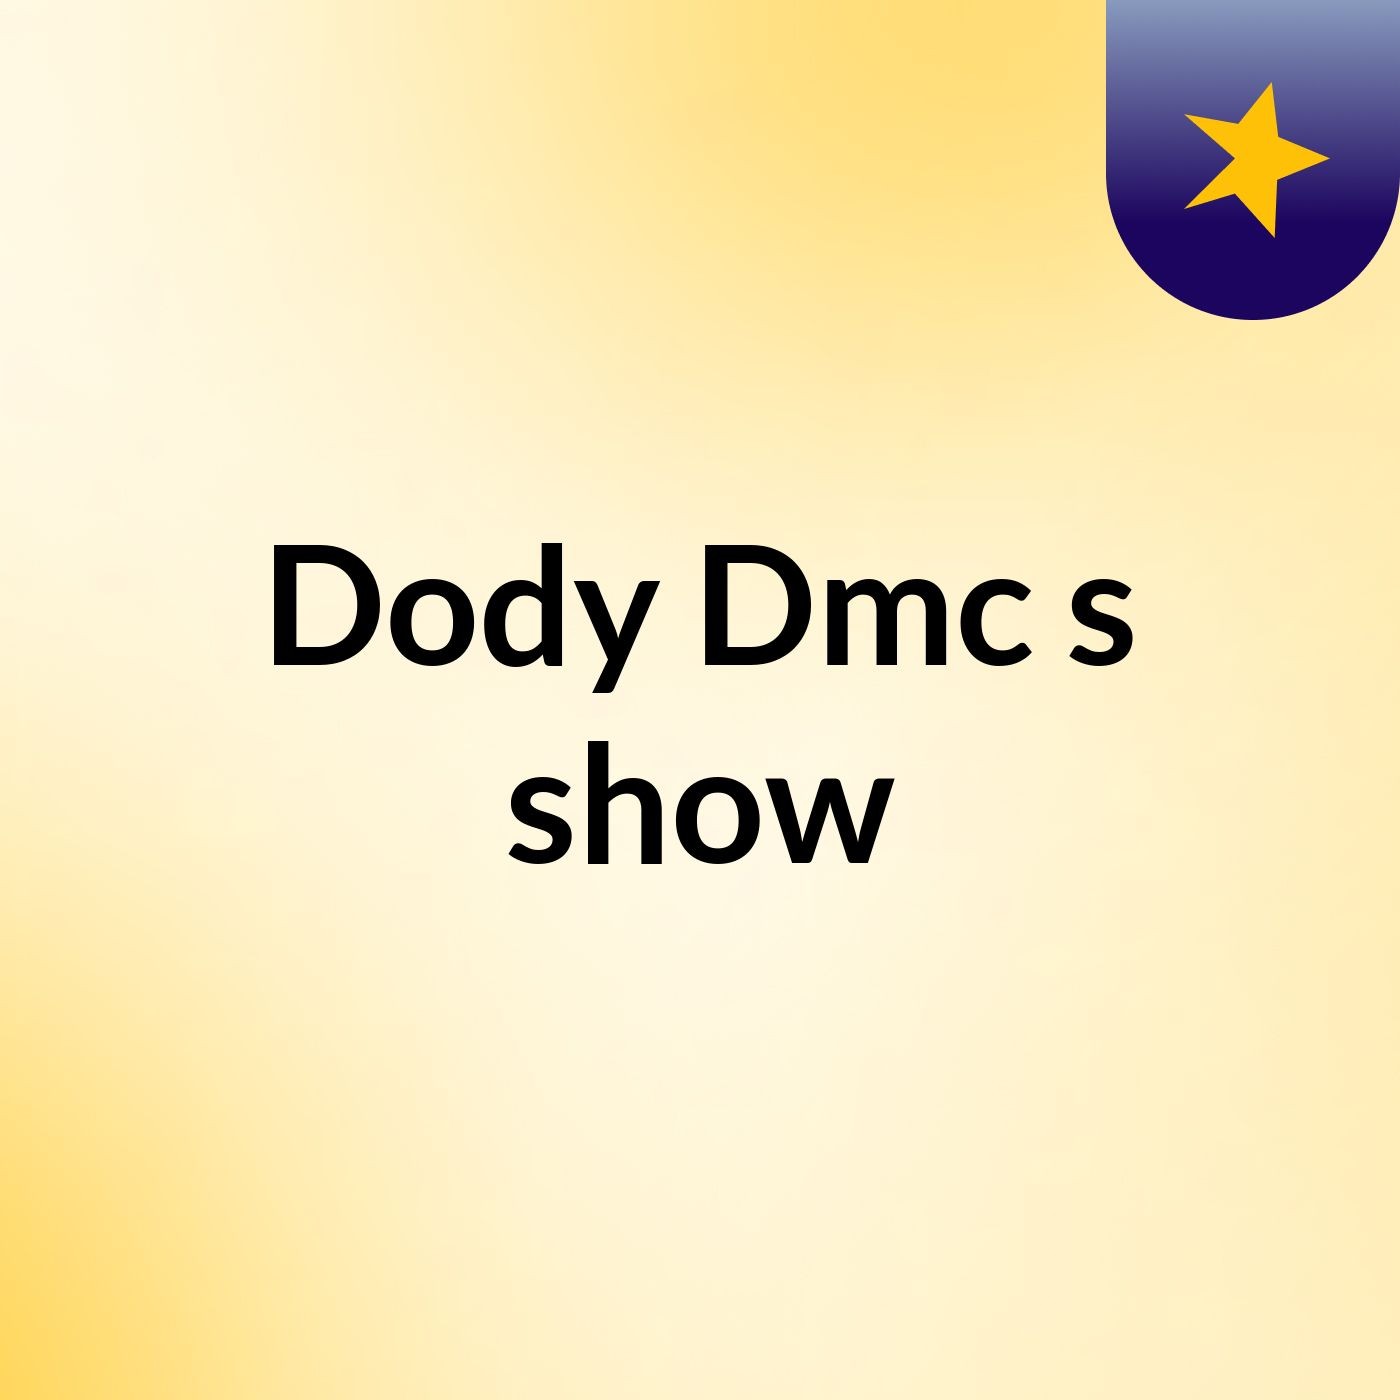 Dody Dmc's show